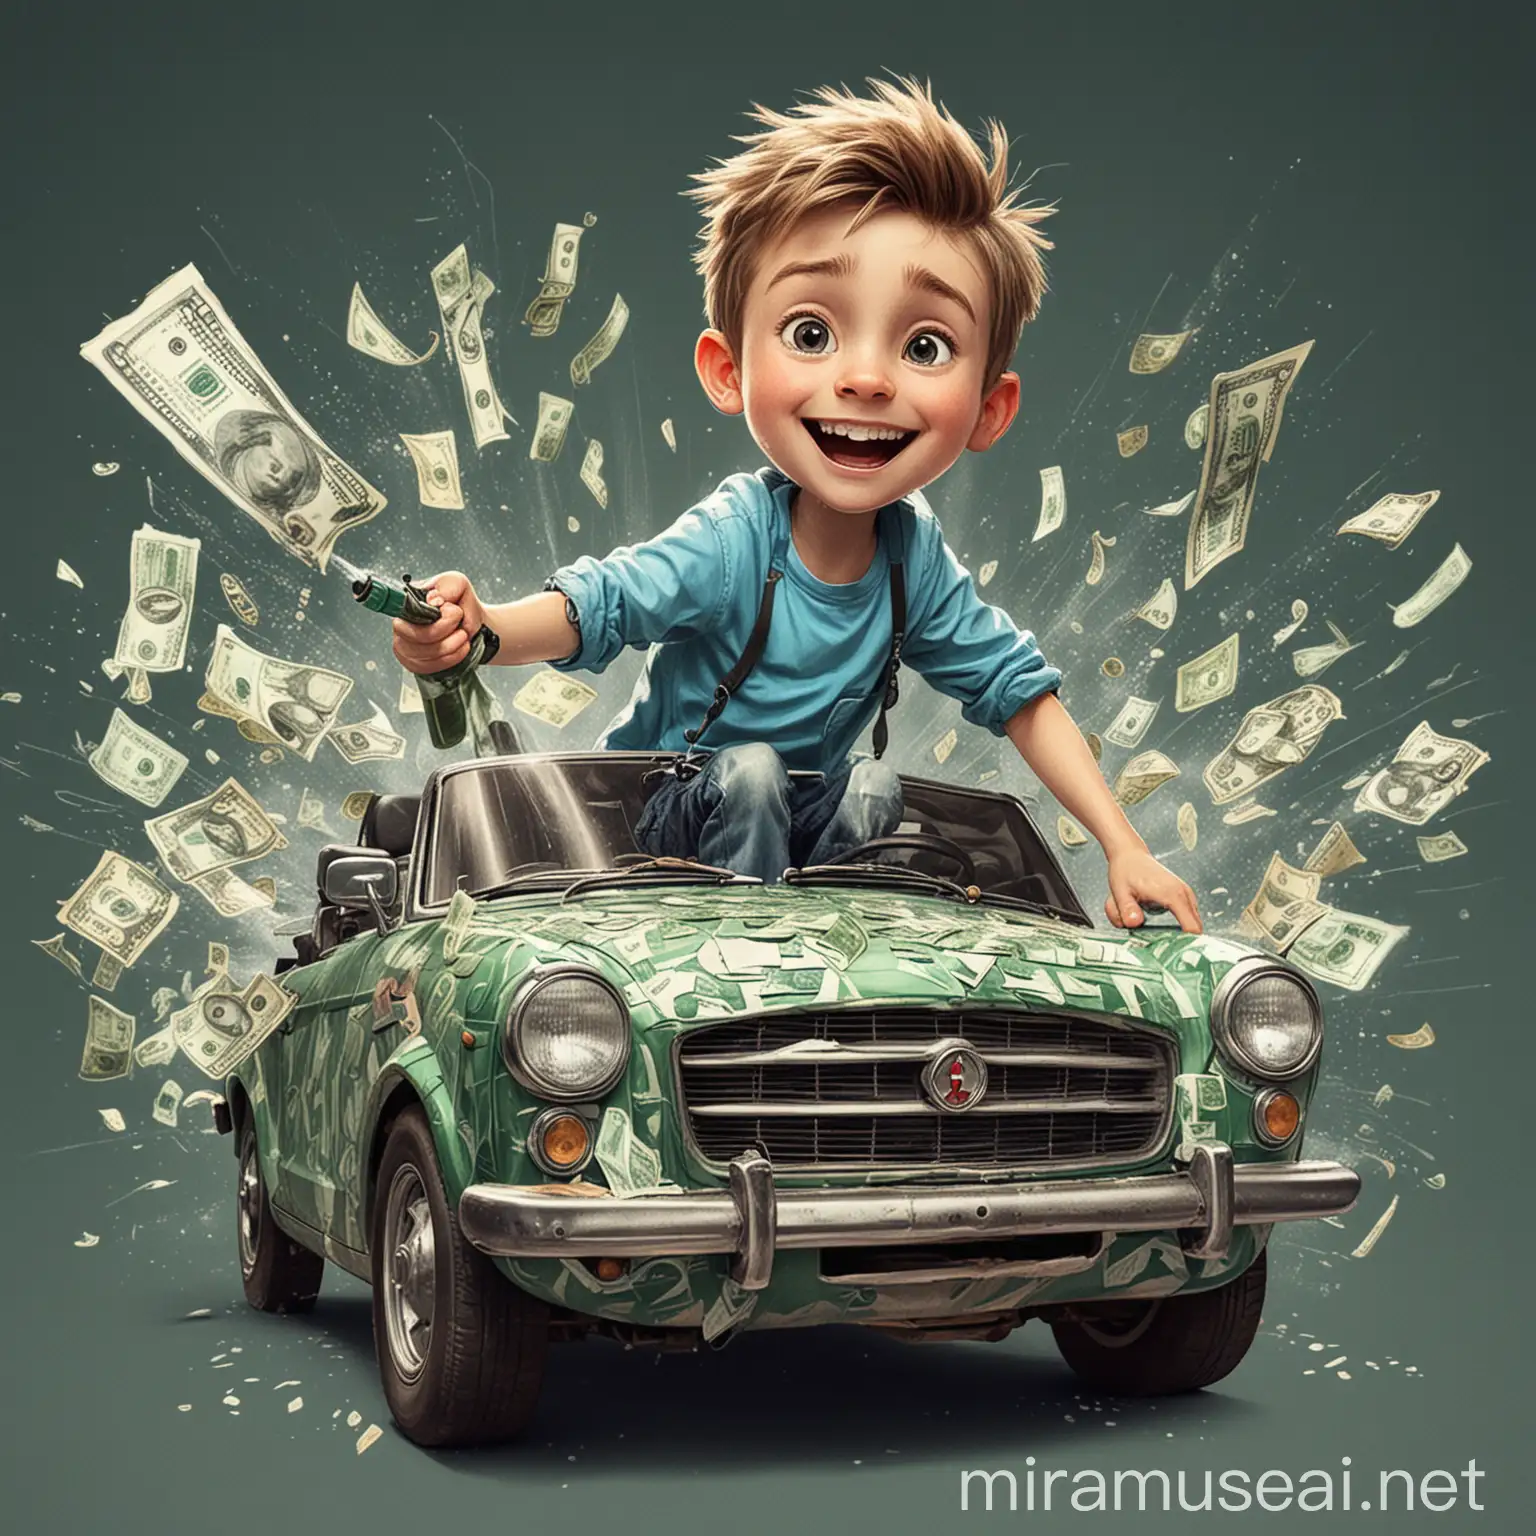 Boy Driving Car Spraying Money